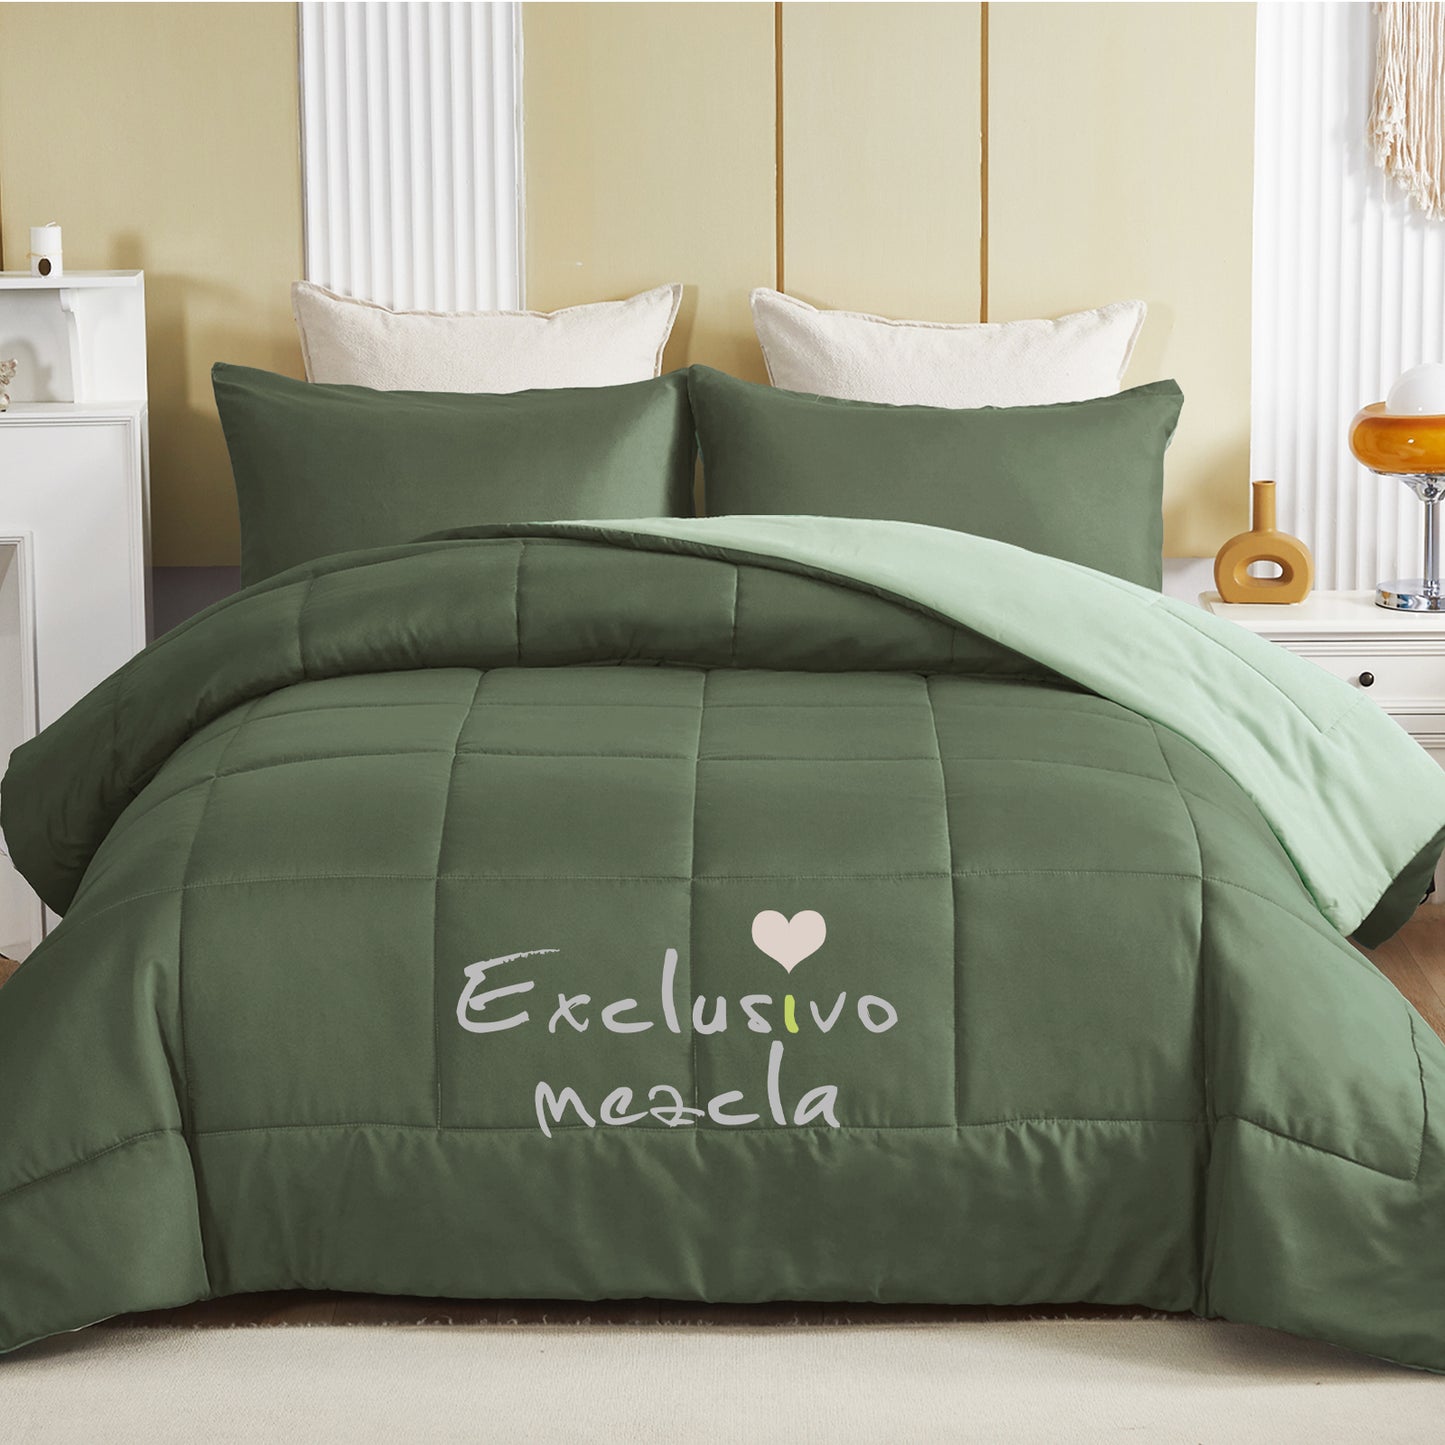 Exclusivo Mezcla Lightweight Reversible 3-Piece Comforter Set All Seasons, Down Alternative Comforter with 2 Pillow Shams, King Size, Emerald/Mint